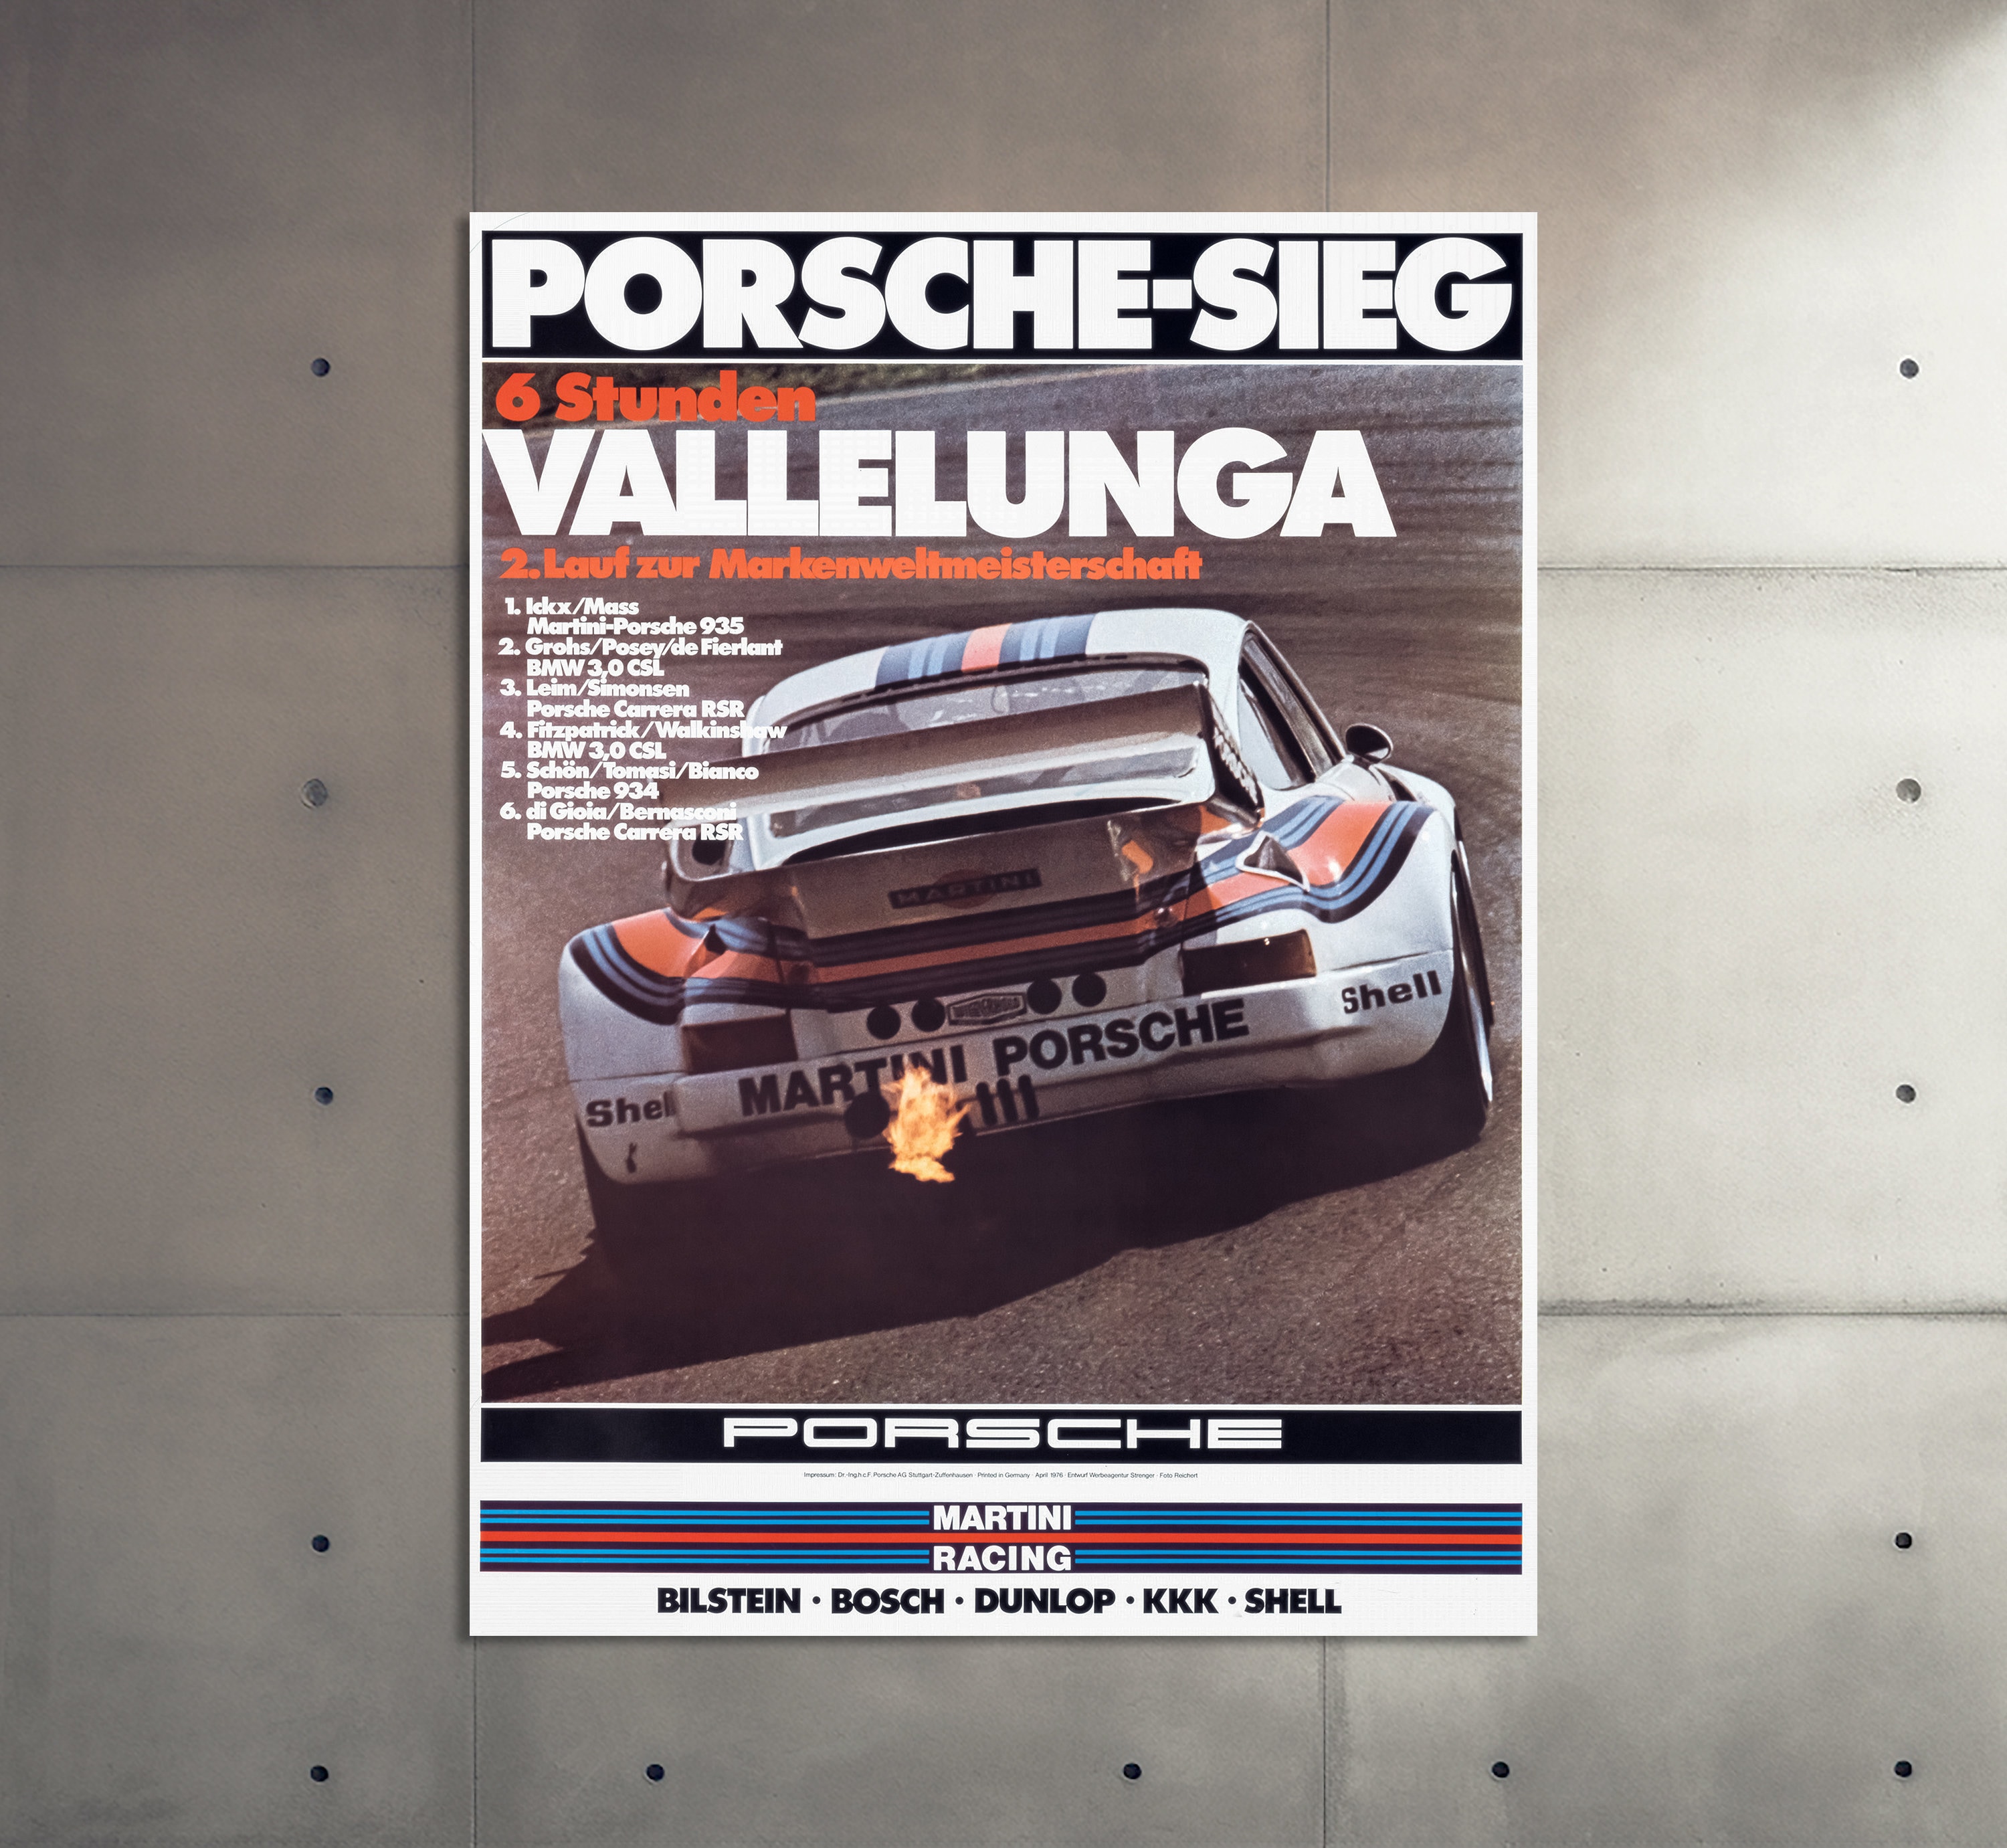 Porsche Martini Racing Advertising Poster Vintage 6 Hours of Vallelunga  Motorsport Poster Vintage Car Poster Large Wall Art Print 